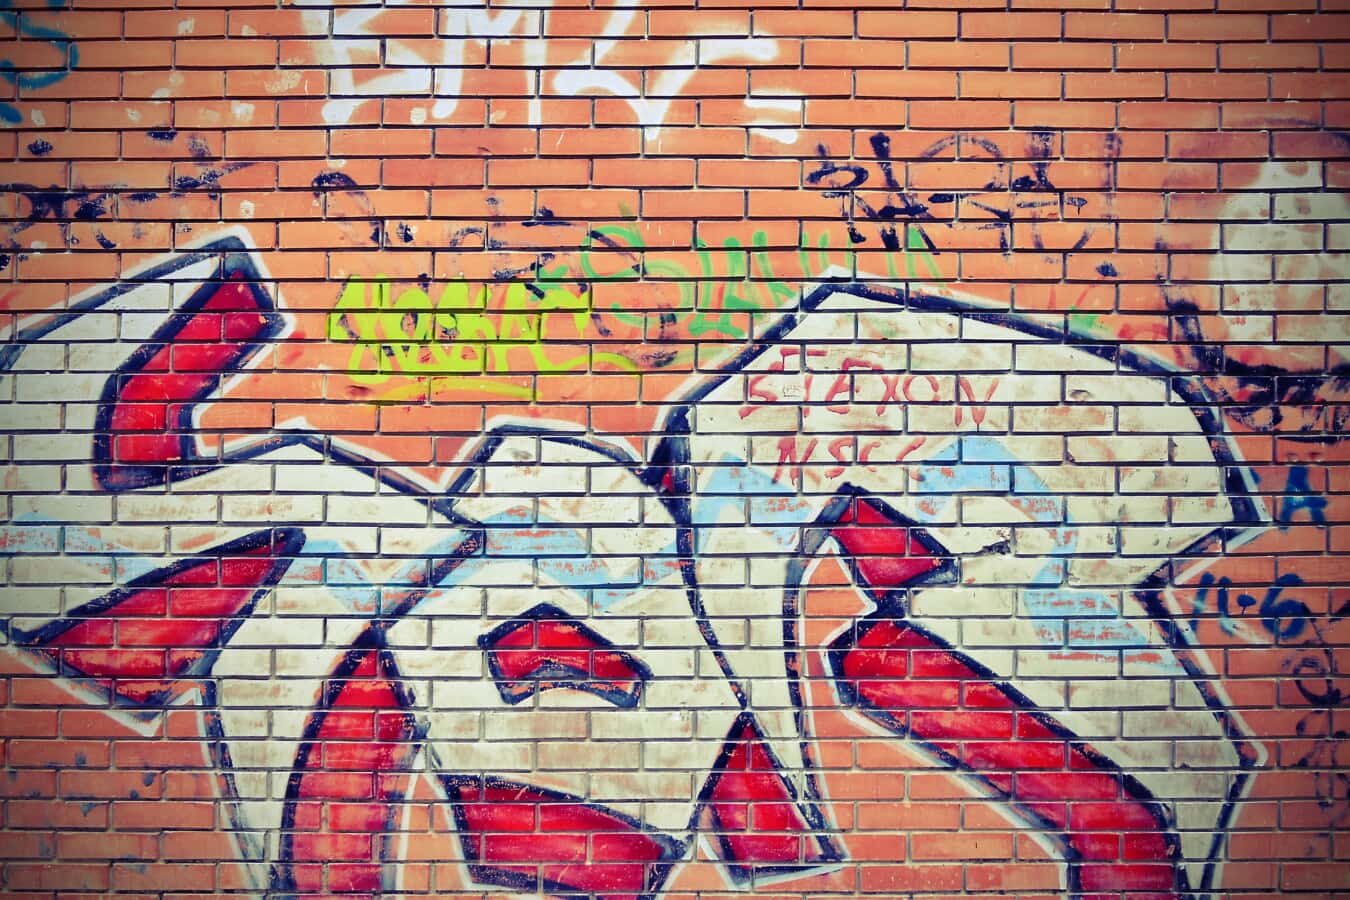 wall, bricks, graffiti, abandoned, vandalism, decay, colorful, urban area, brick, pattern